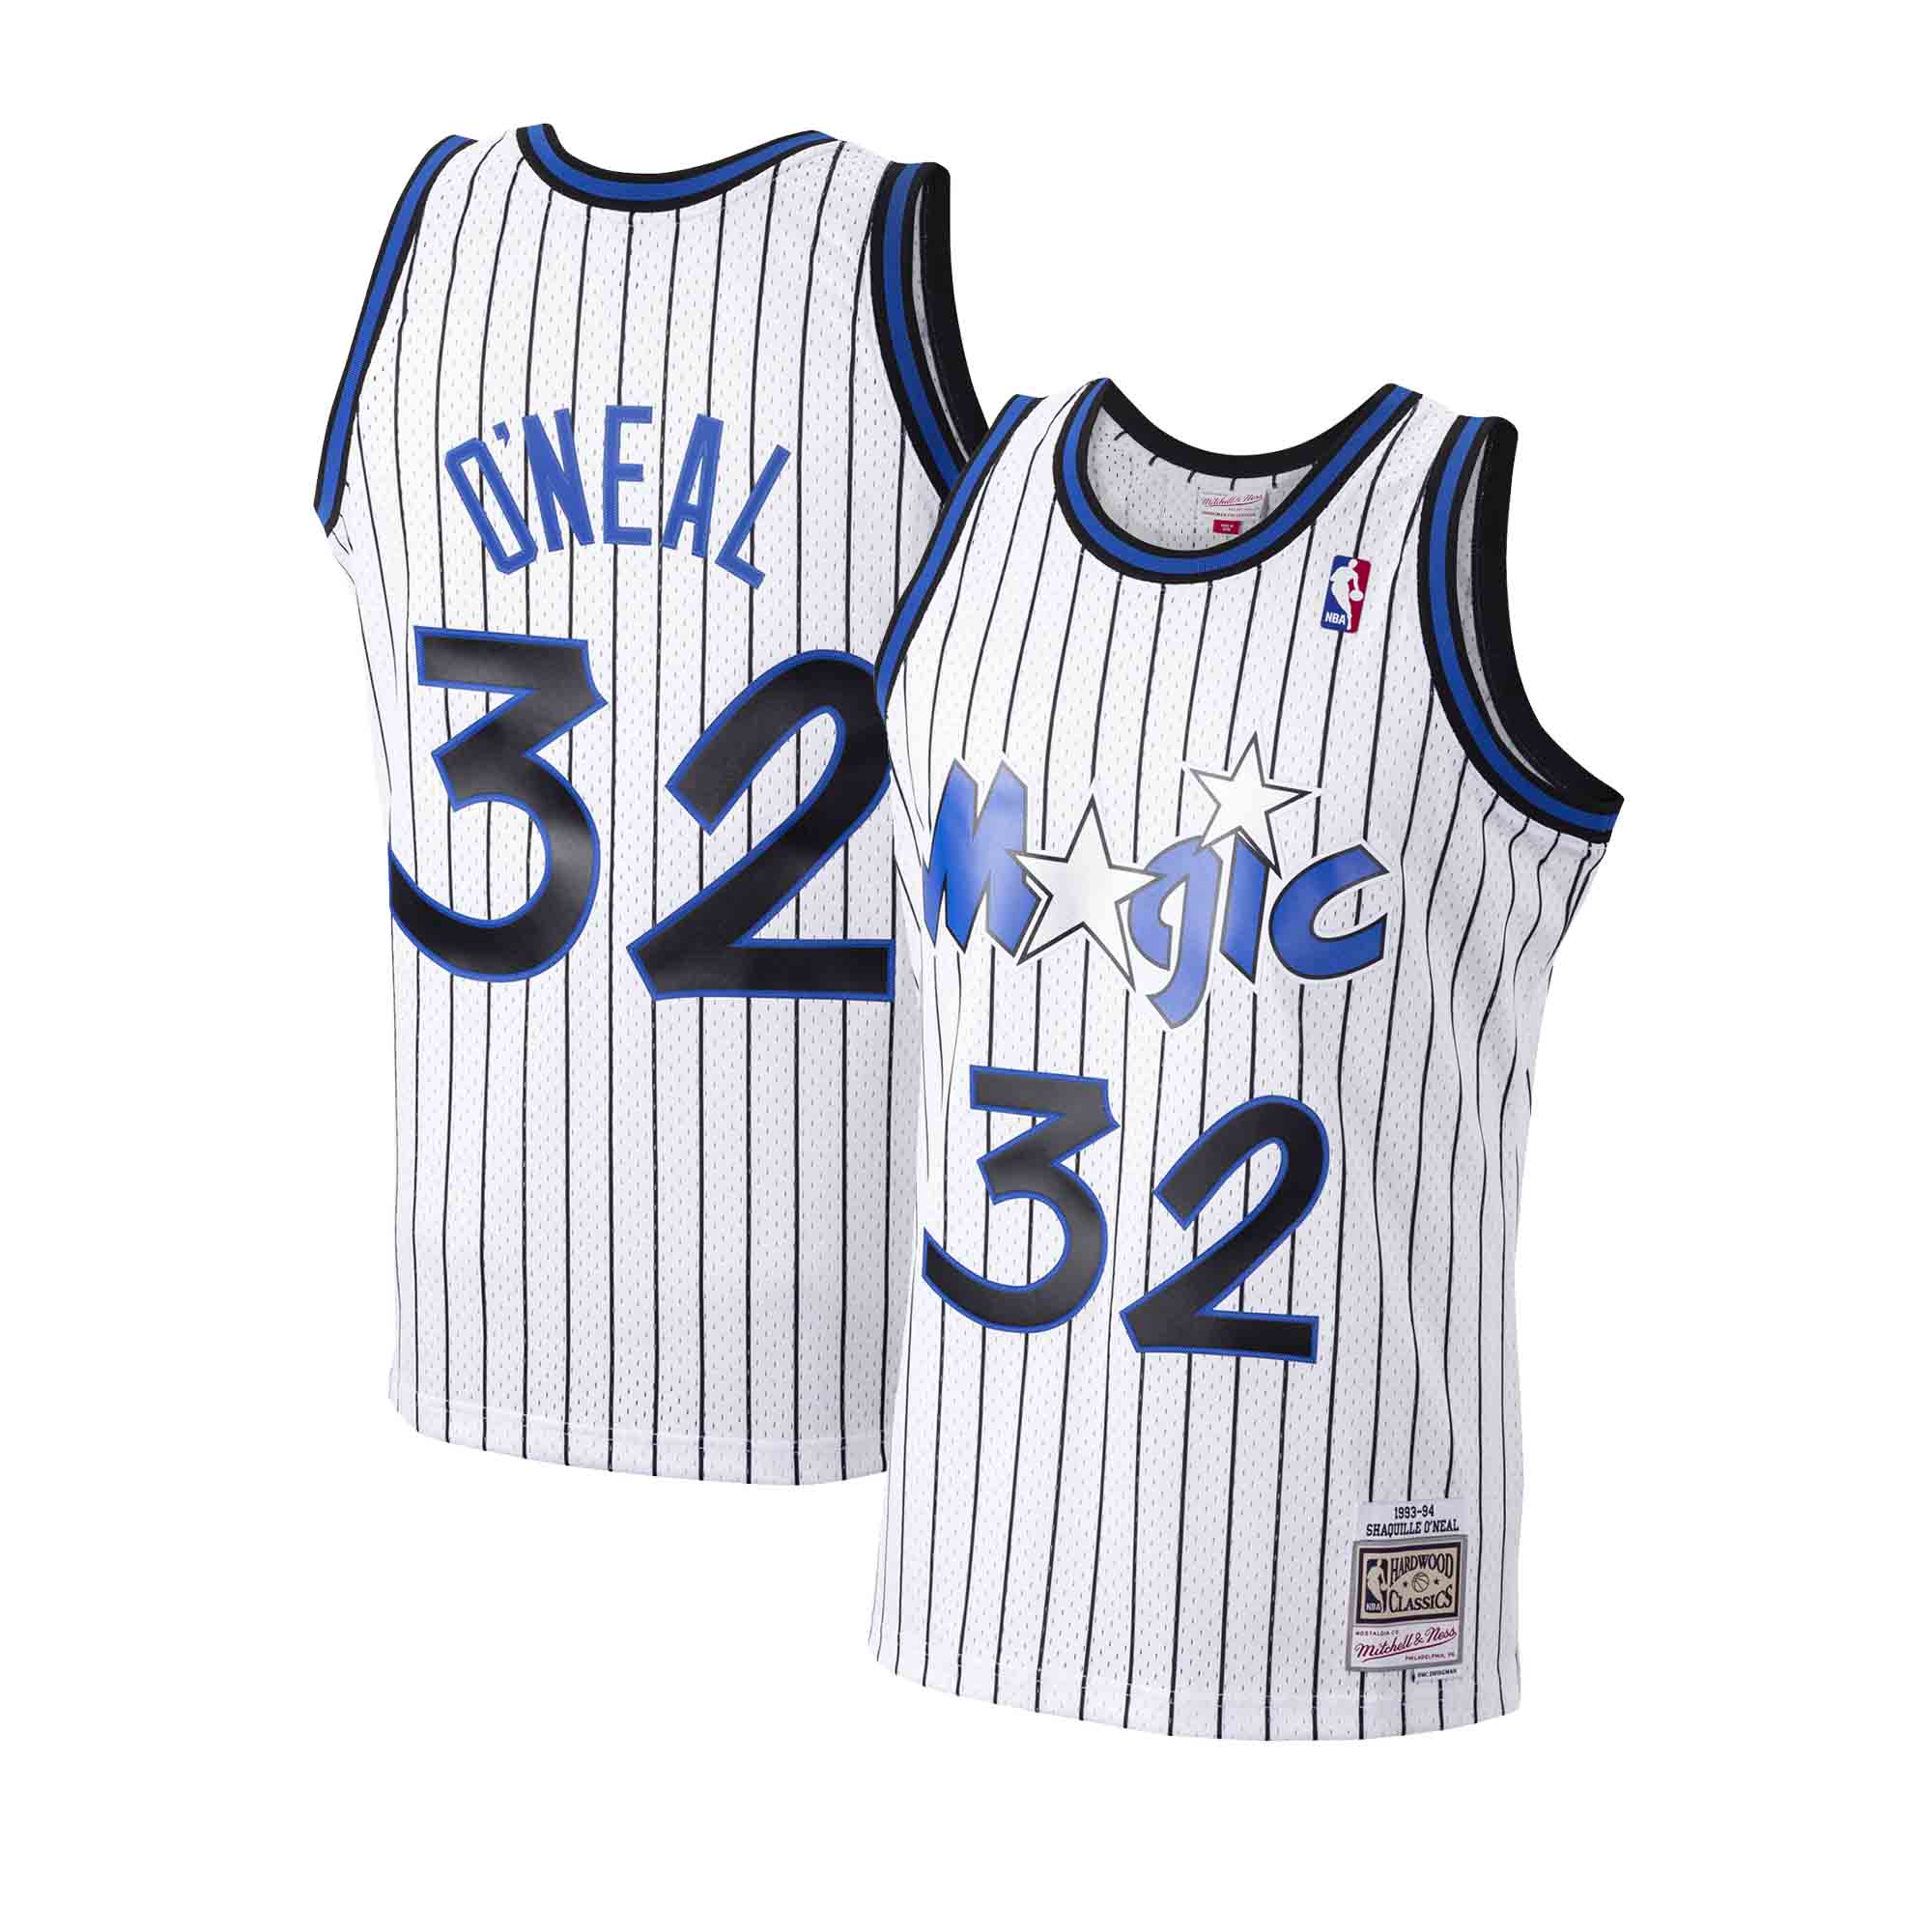 Shaquille O'Neal Jersey - NBA Orlando Magic Shaquille O'Neal